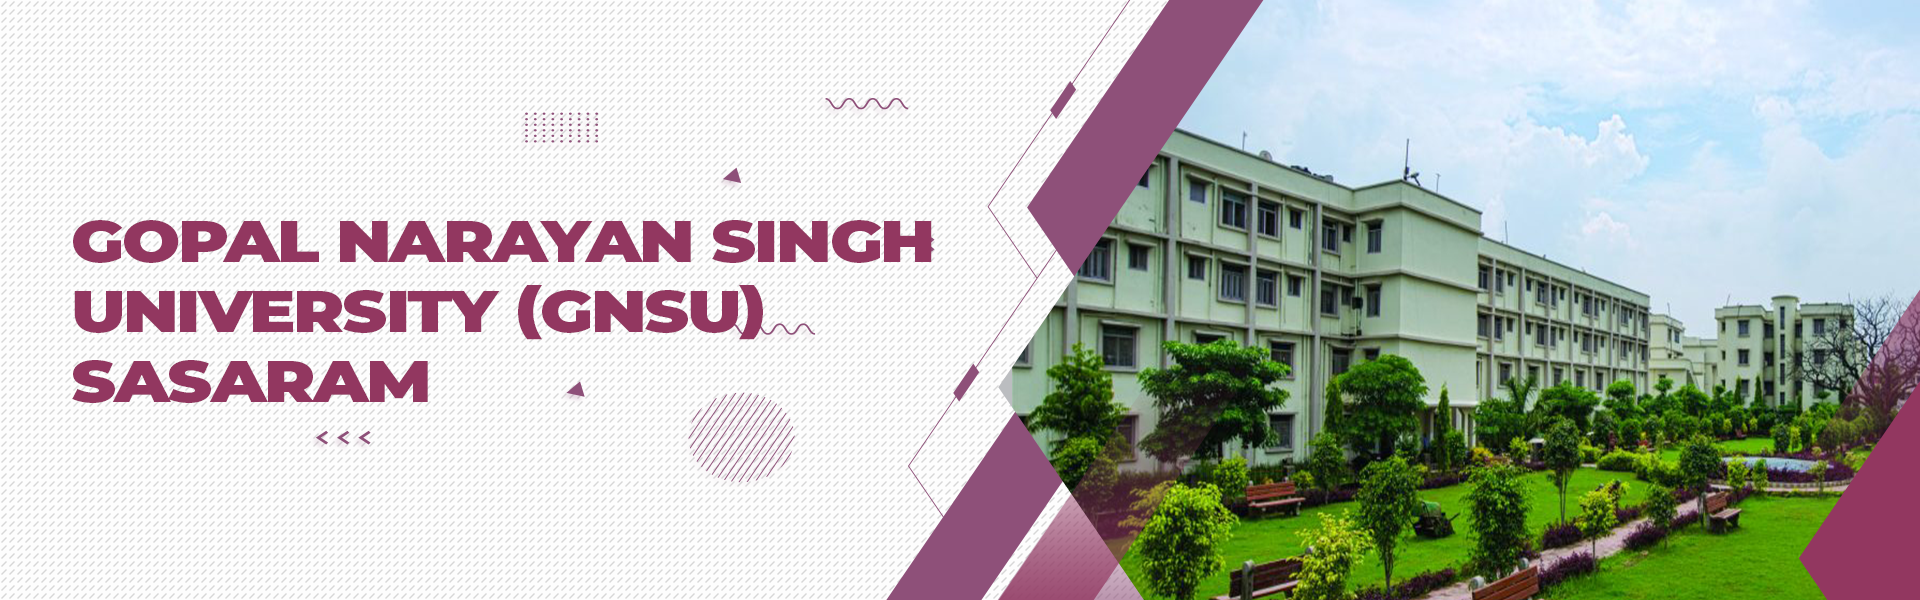 Gopal Narayan Singh University (GNSU)